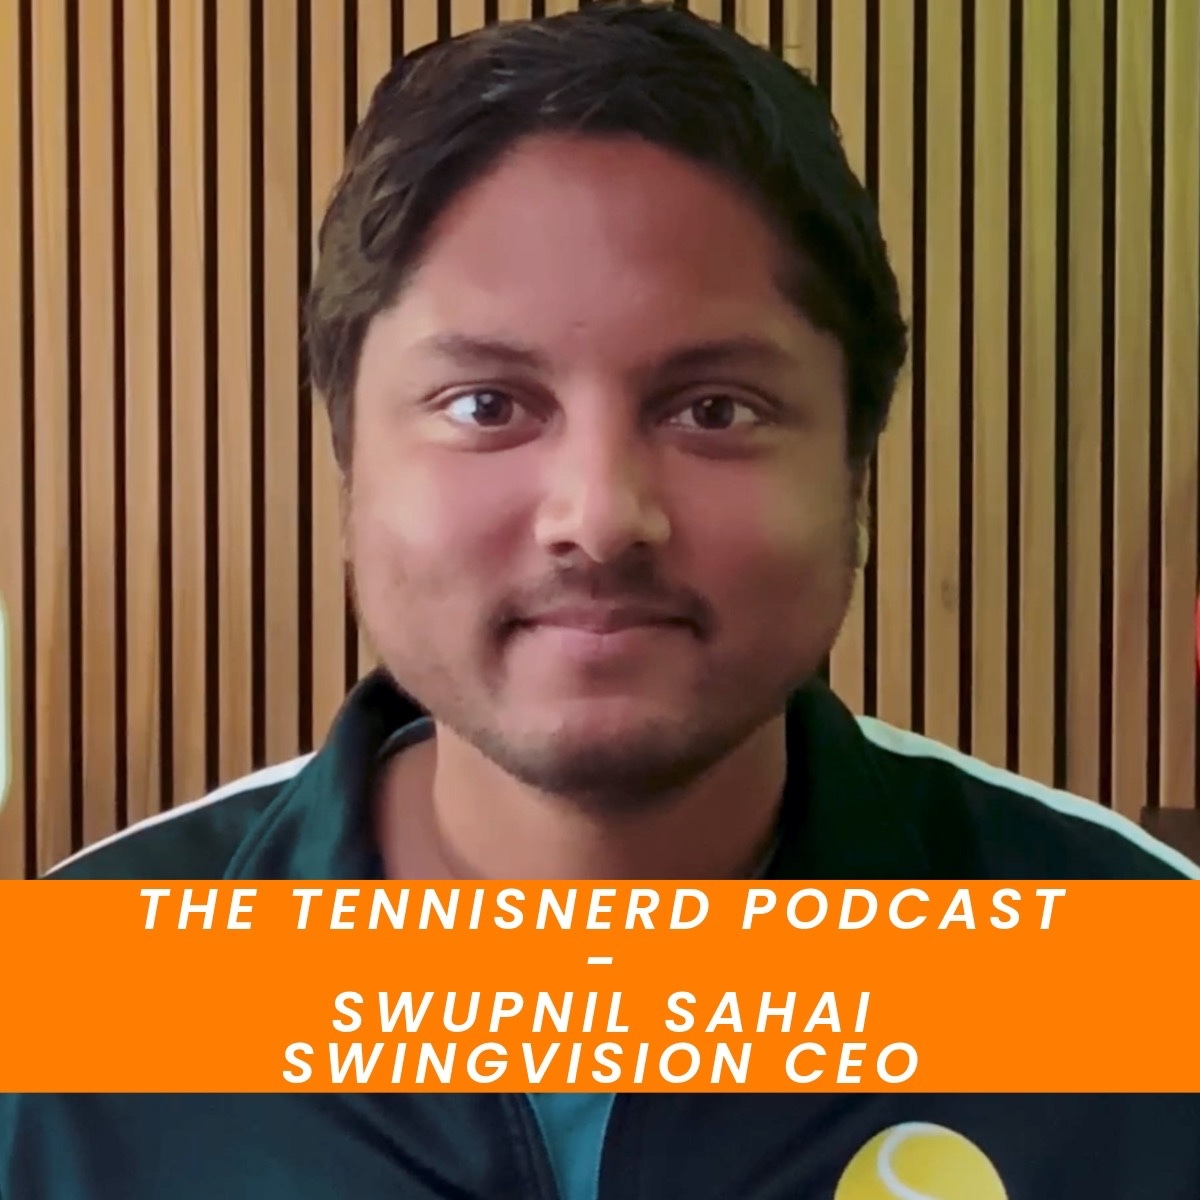 Podcast with Swingvision CEO, Swupnil Sahai